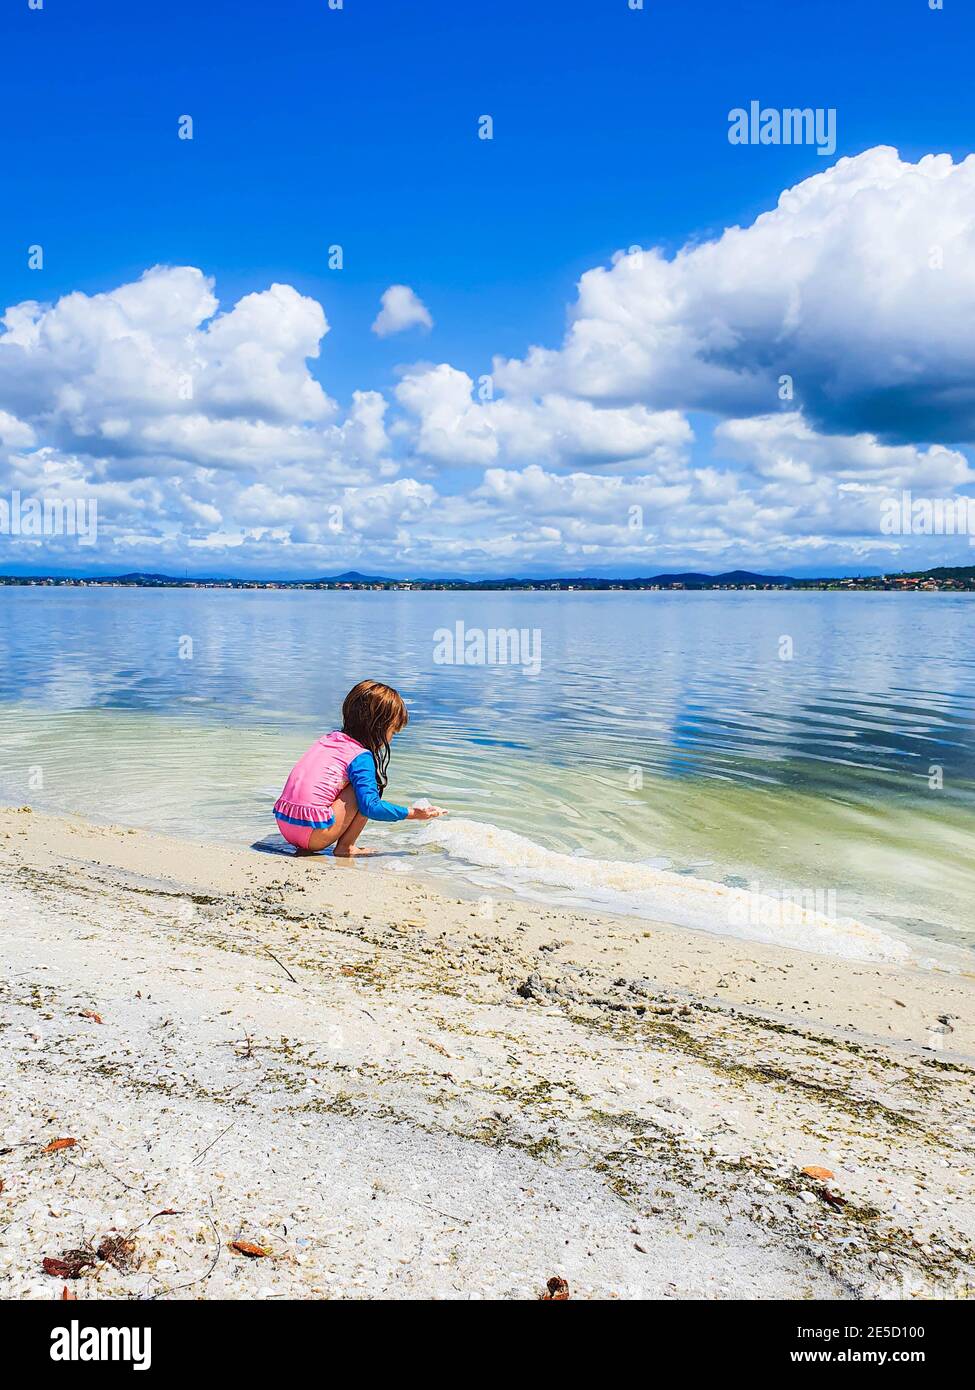 Girl crouching on beach playing with sand, Rio de Janeiro, Brazil Stock Photo